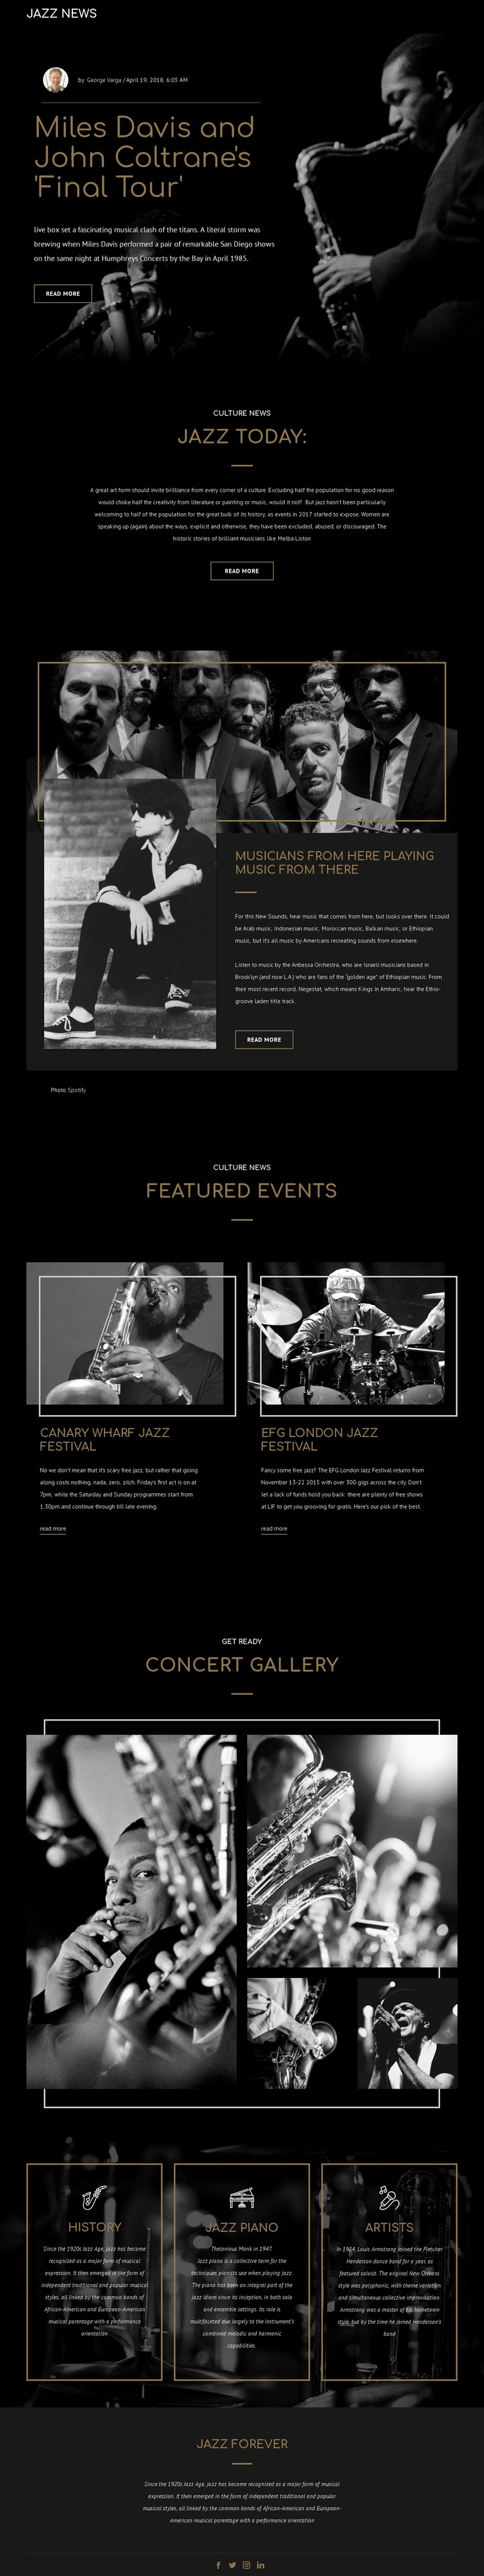 Legengs of jazz music Website Builder Templates